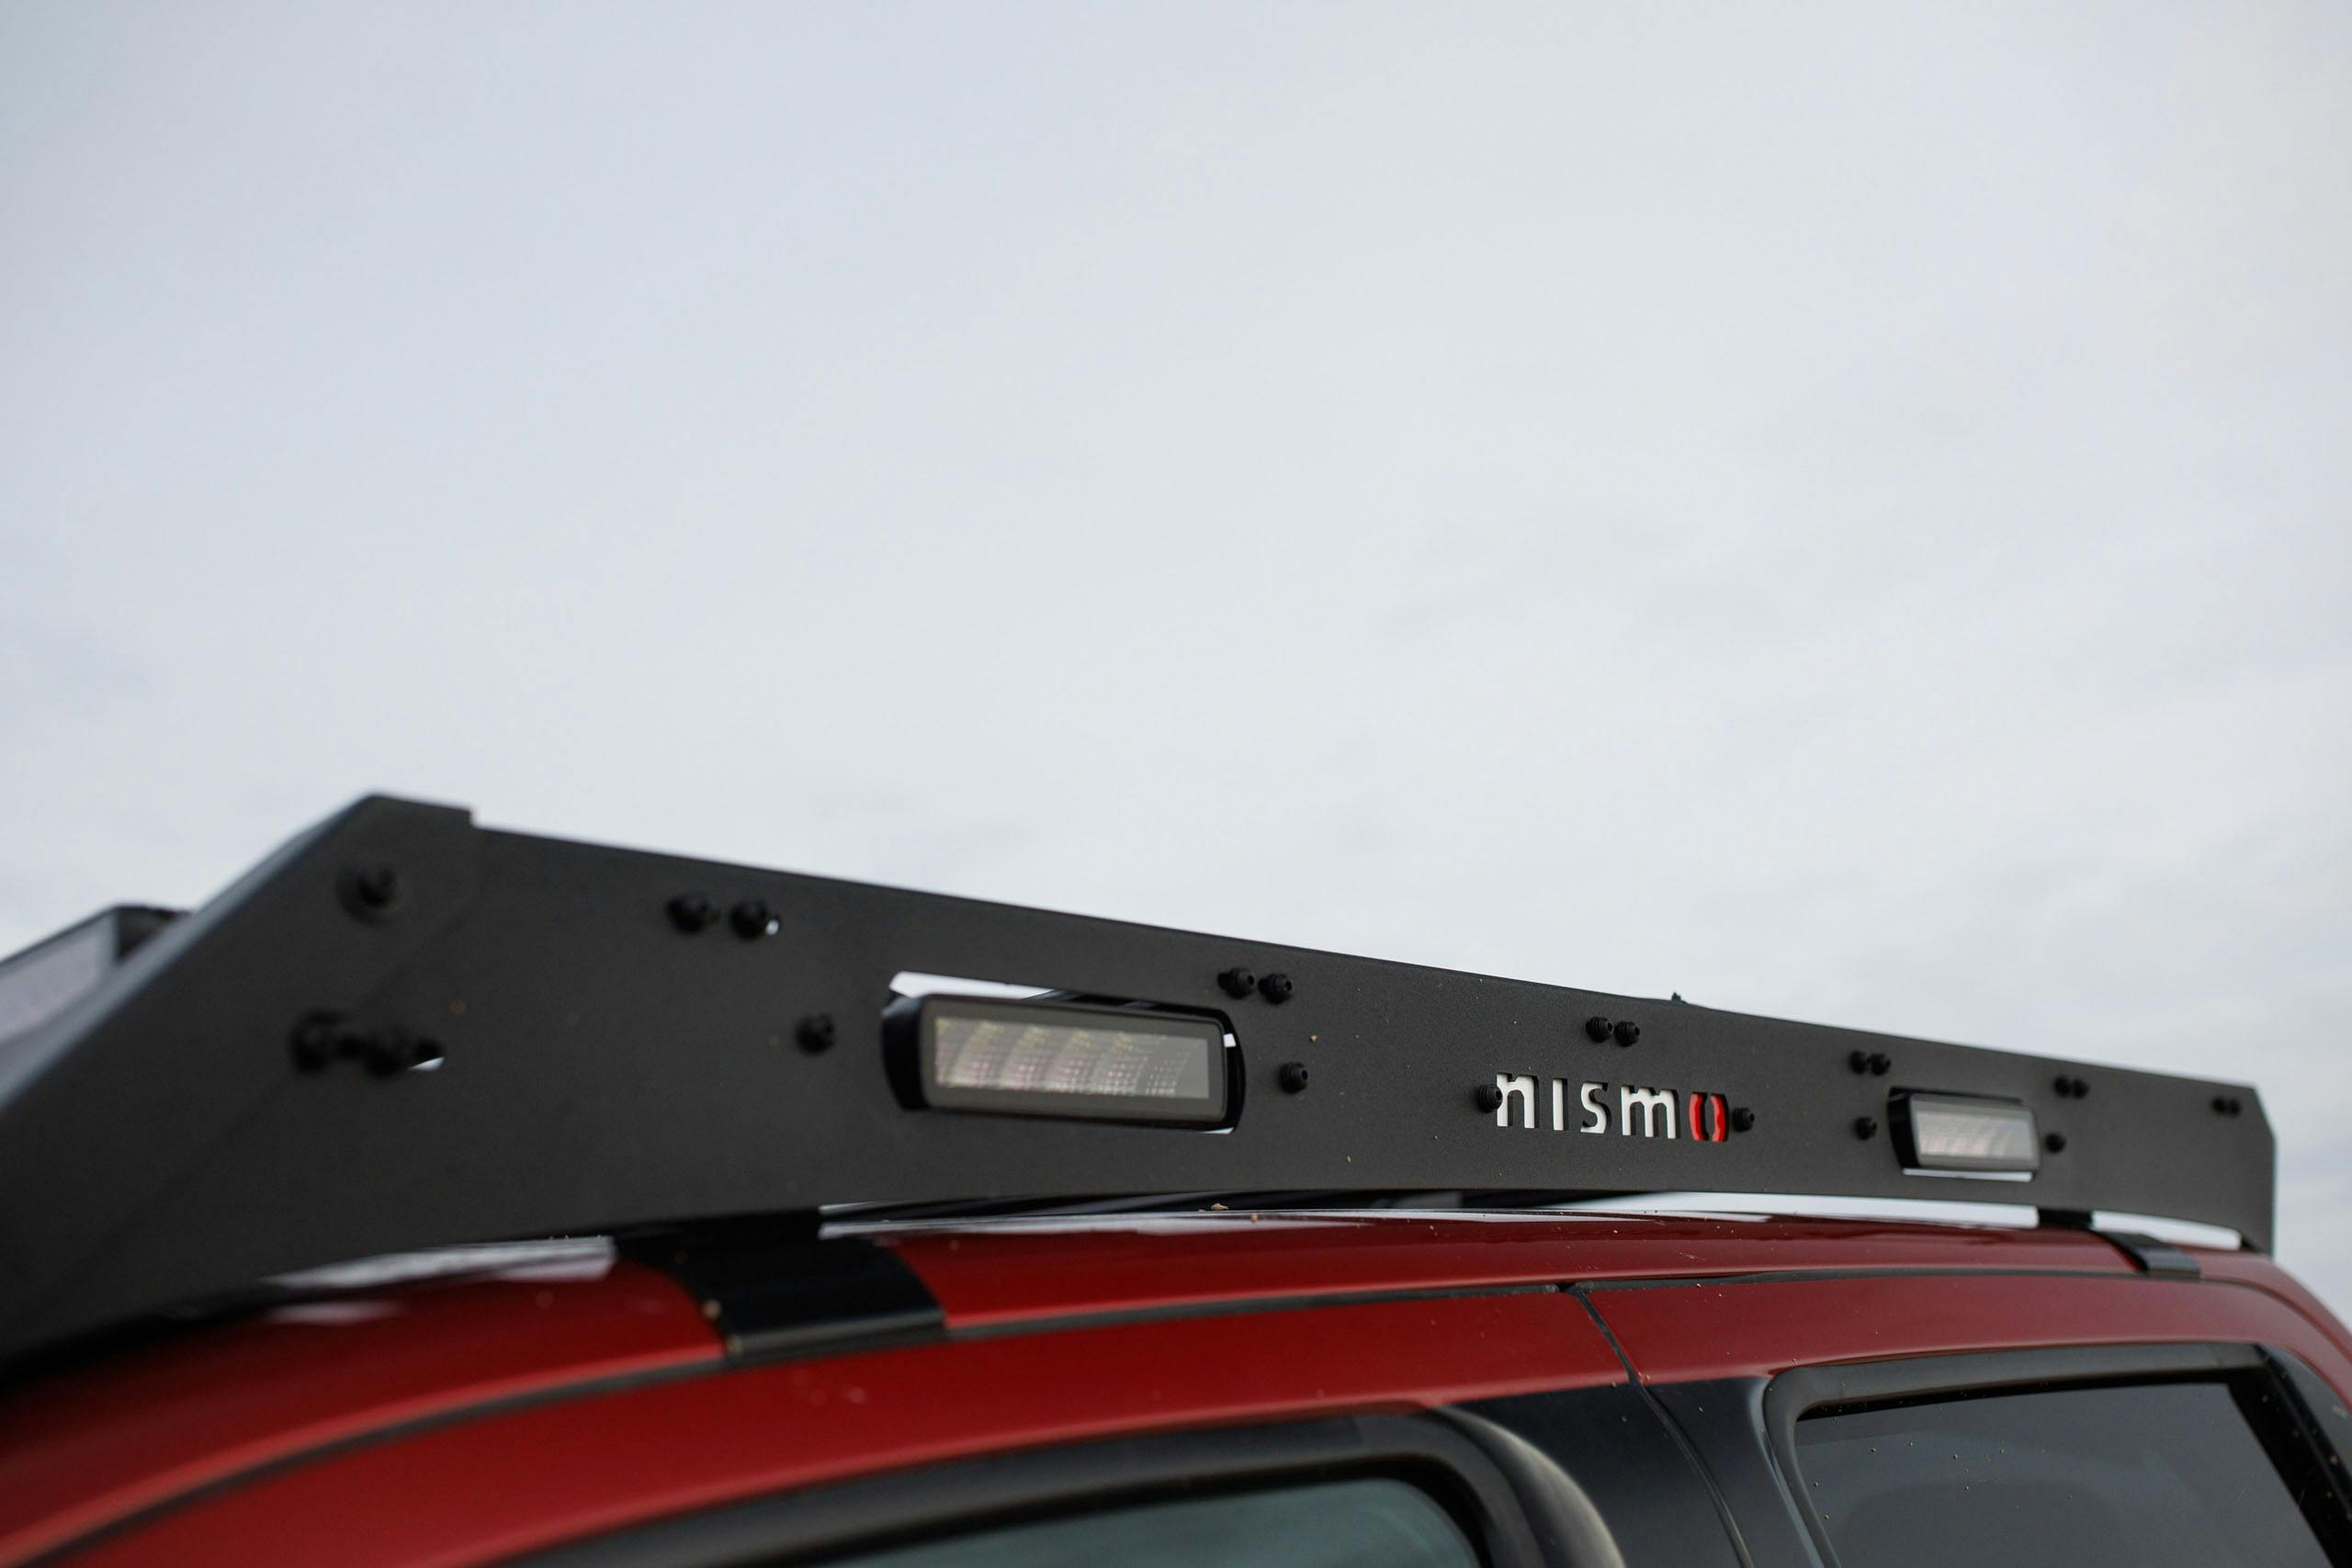 Nissan Frontier Forsberg Edition exterior demo truck roof rack detail